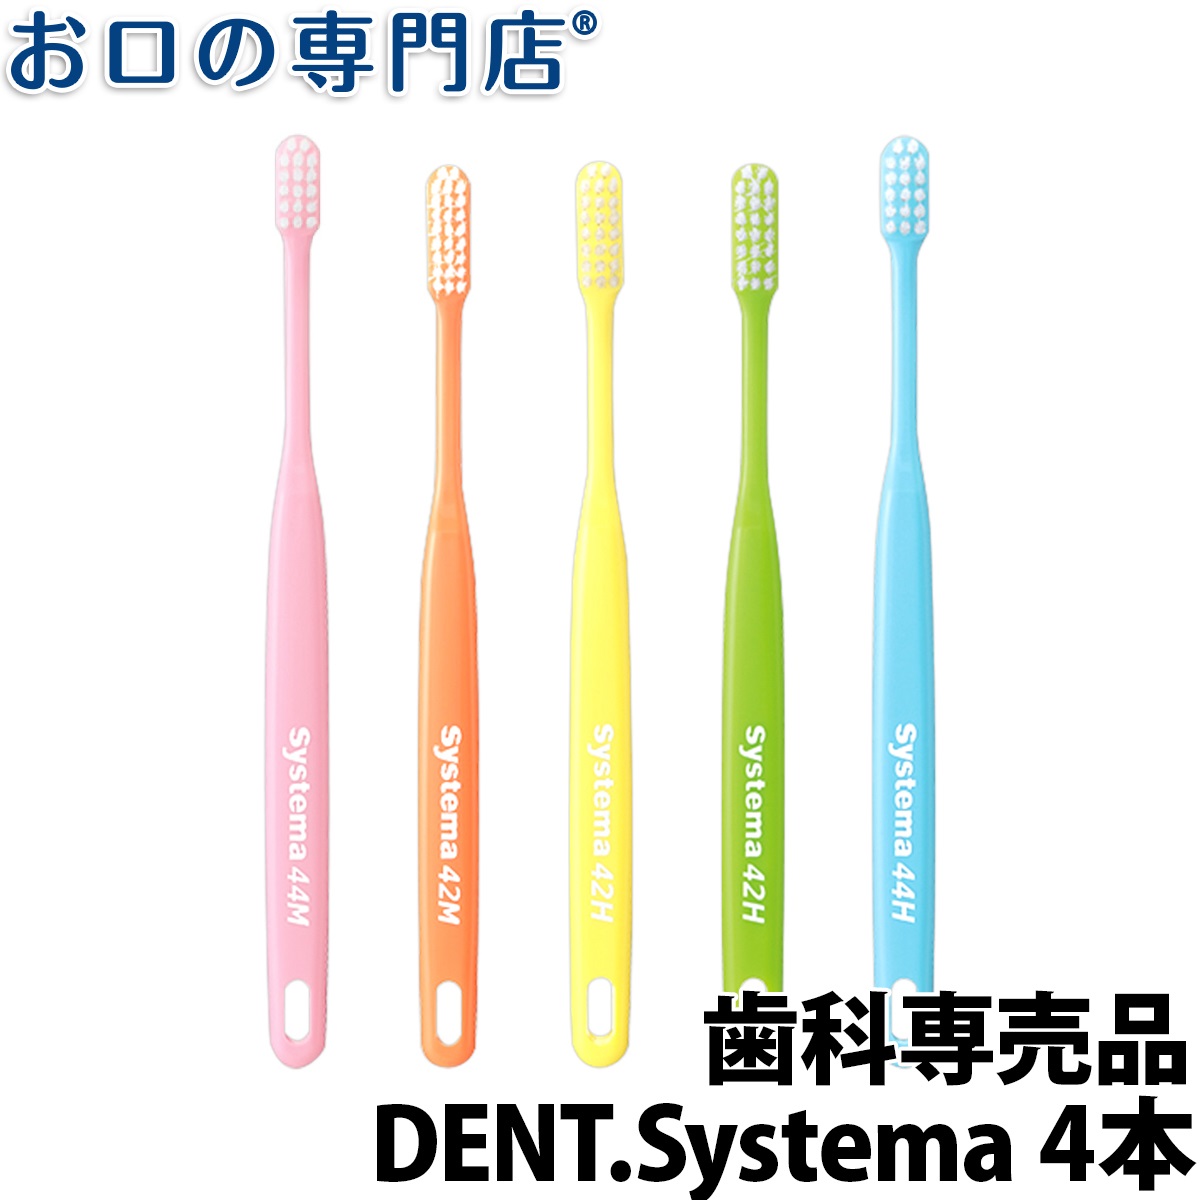 DENT. systema 歯ブラシ 4本